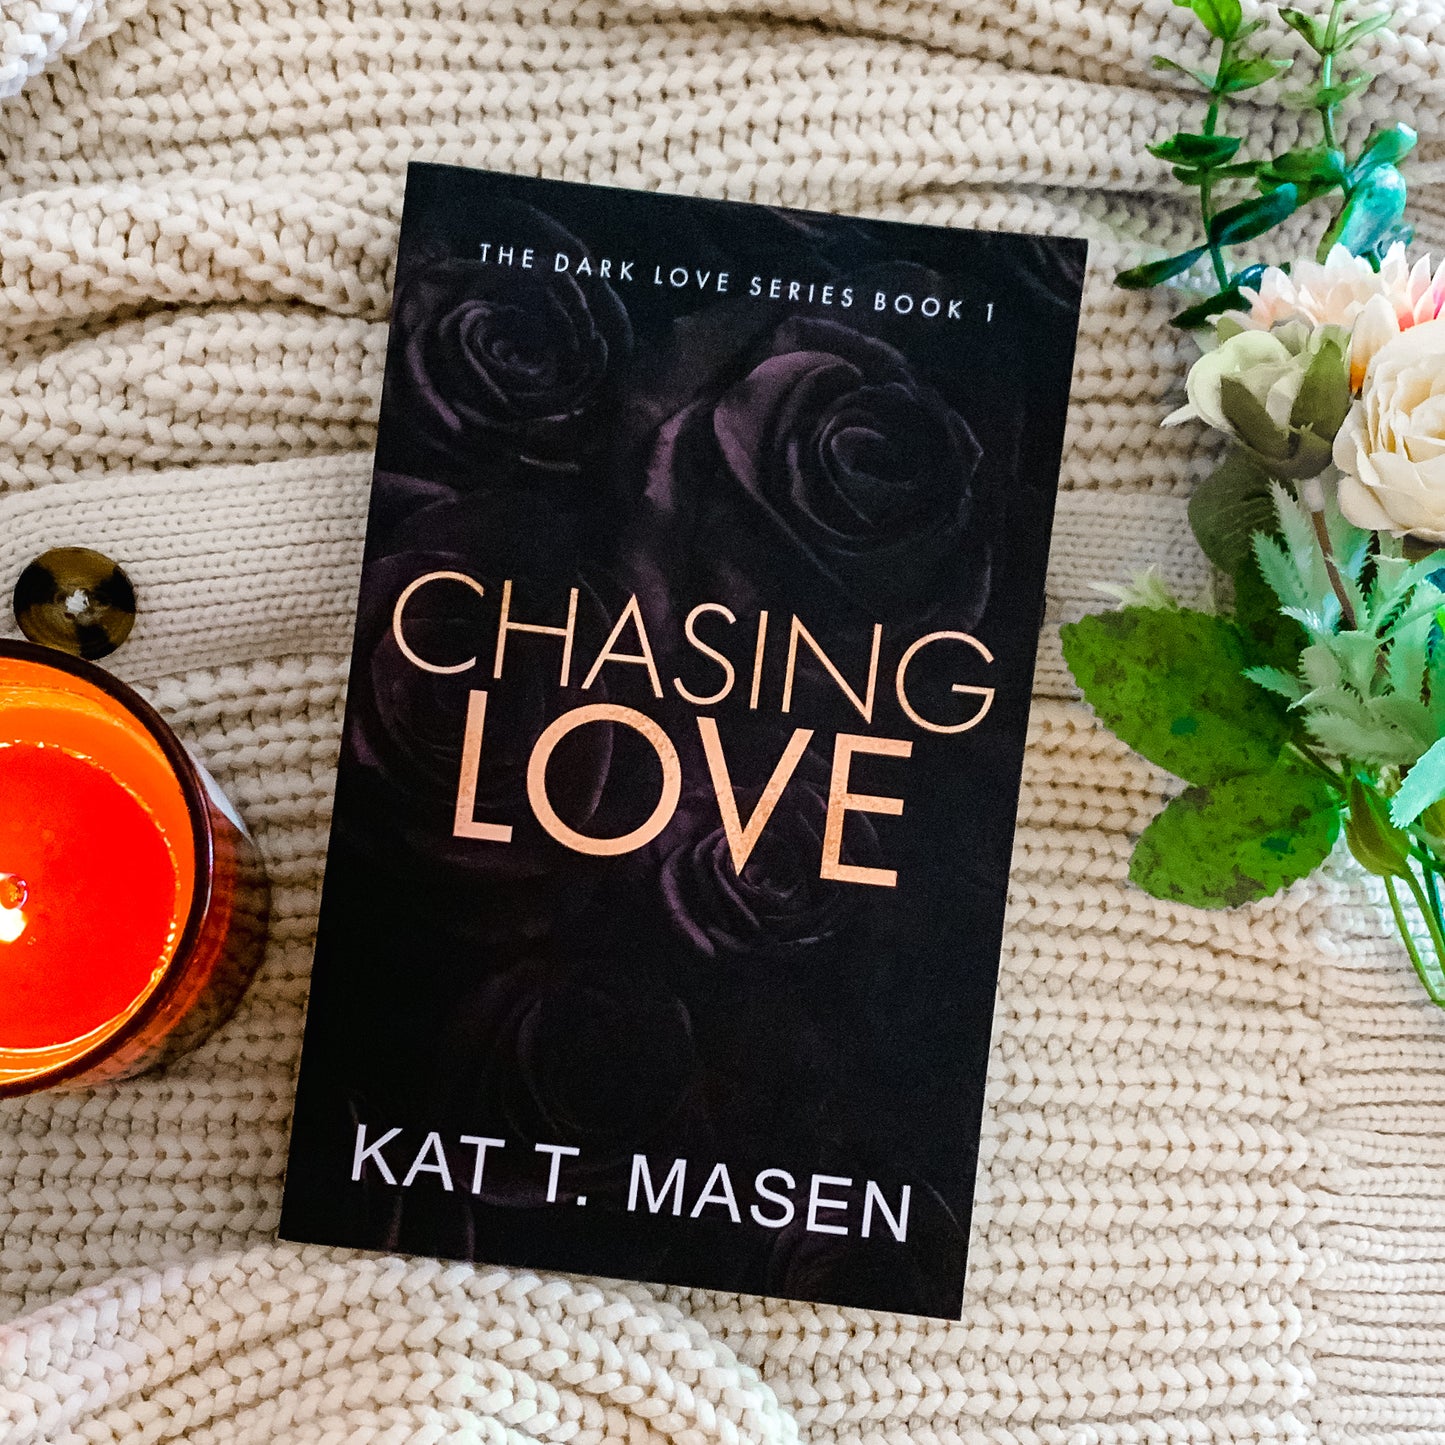 Dark Love Series (Special Edition) by Kat T. Masen